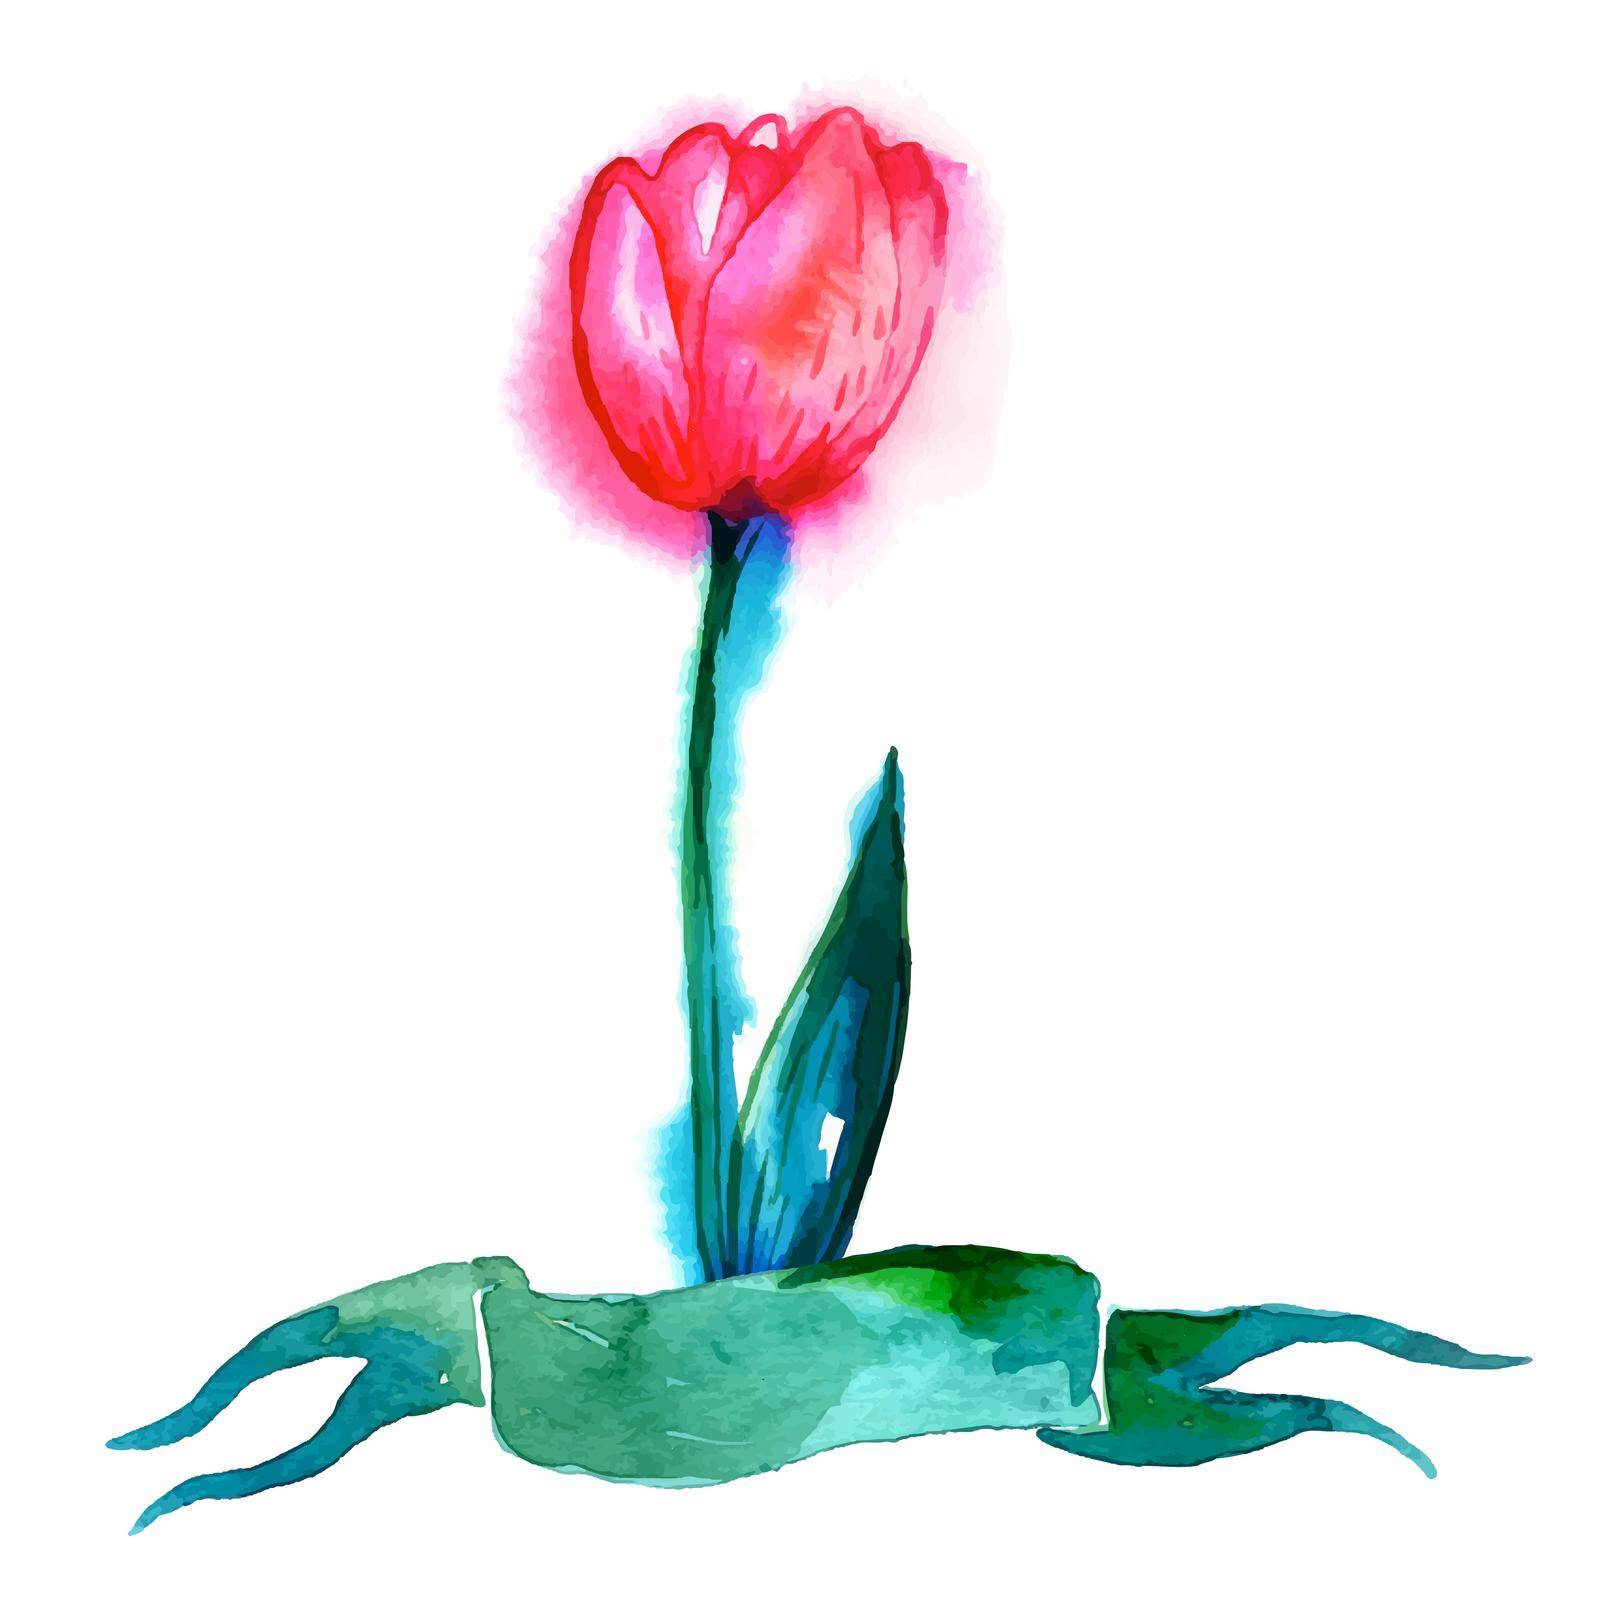 Tulip and ribbon by varka